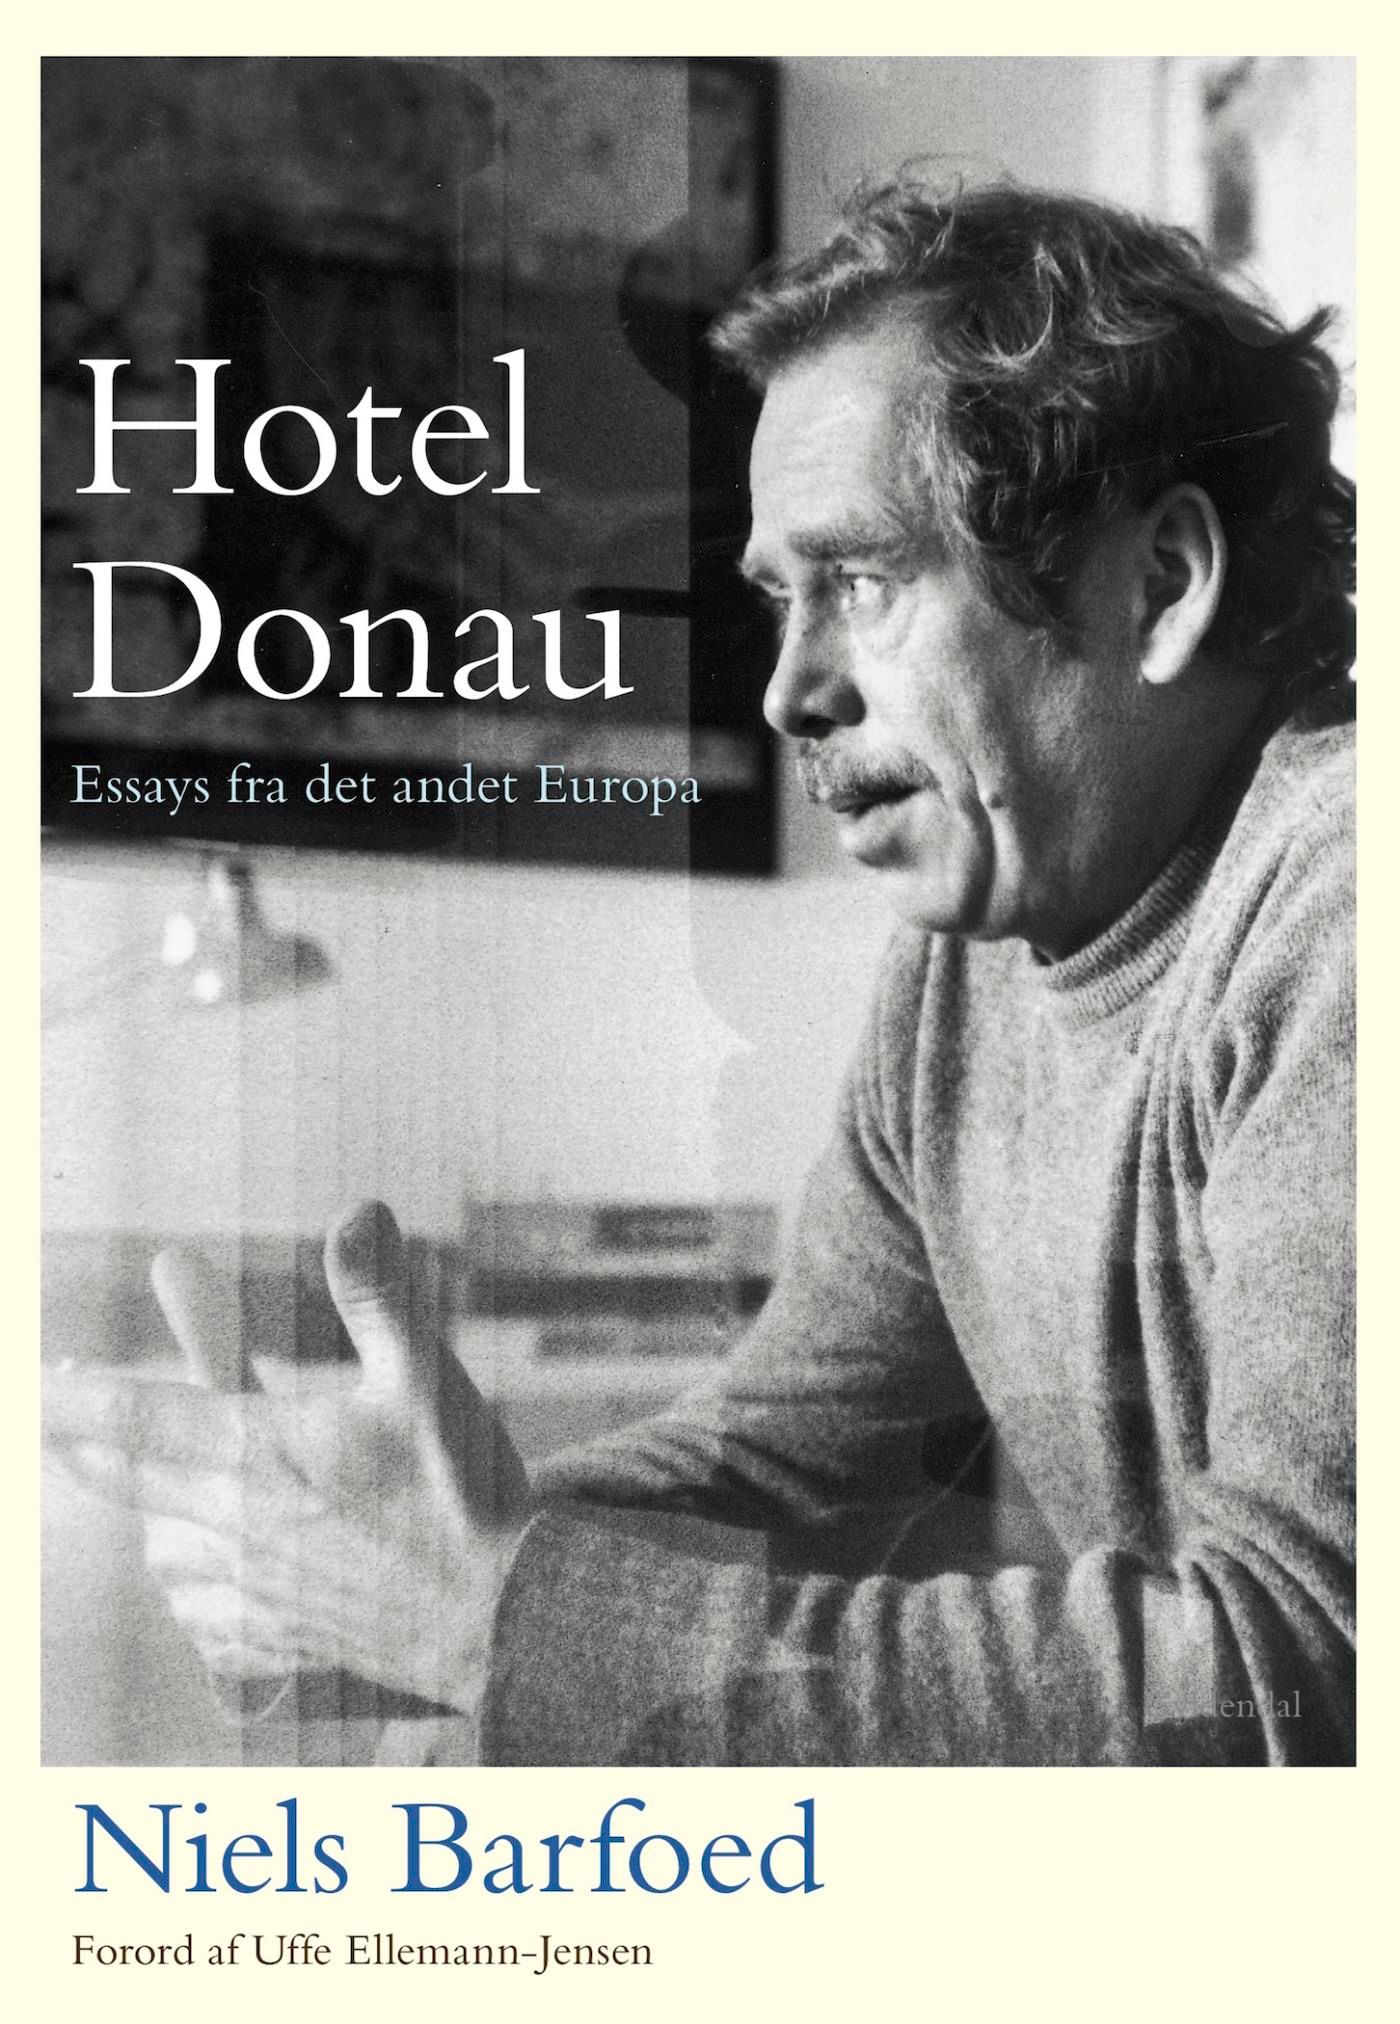 Hotel Donau, e-bok av Niels Barfoed